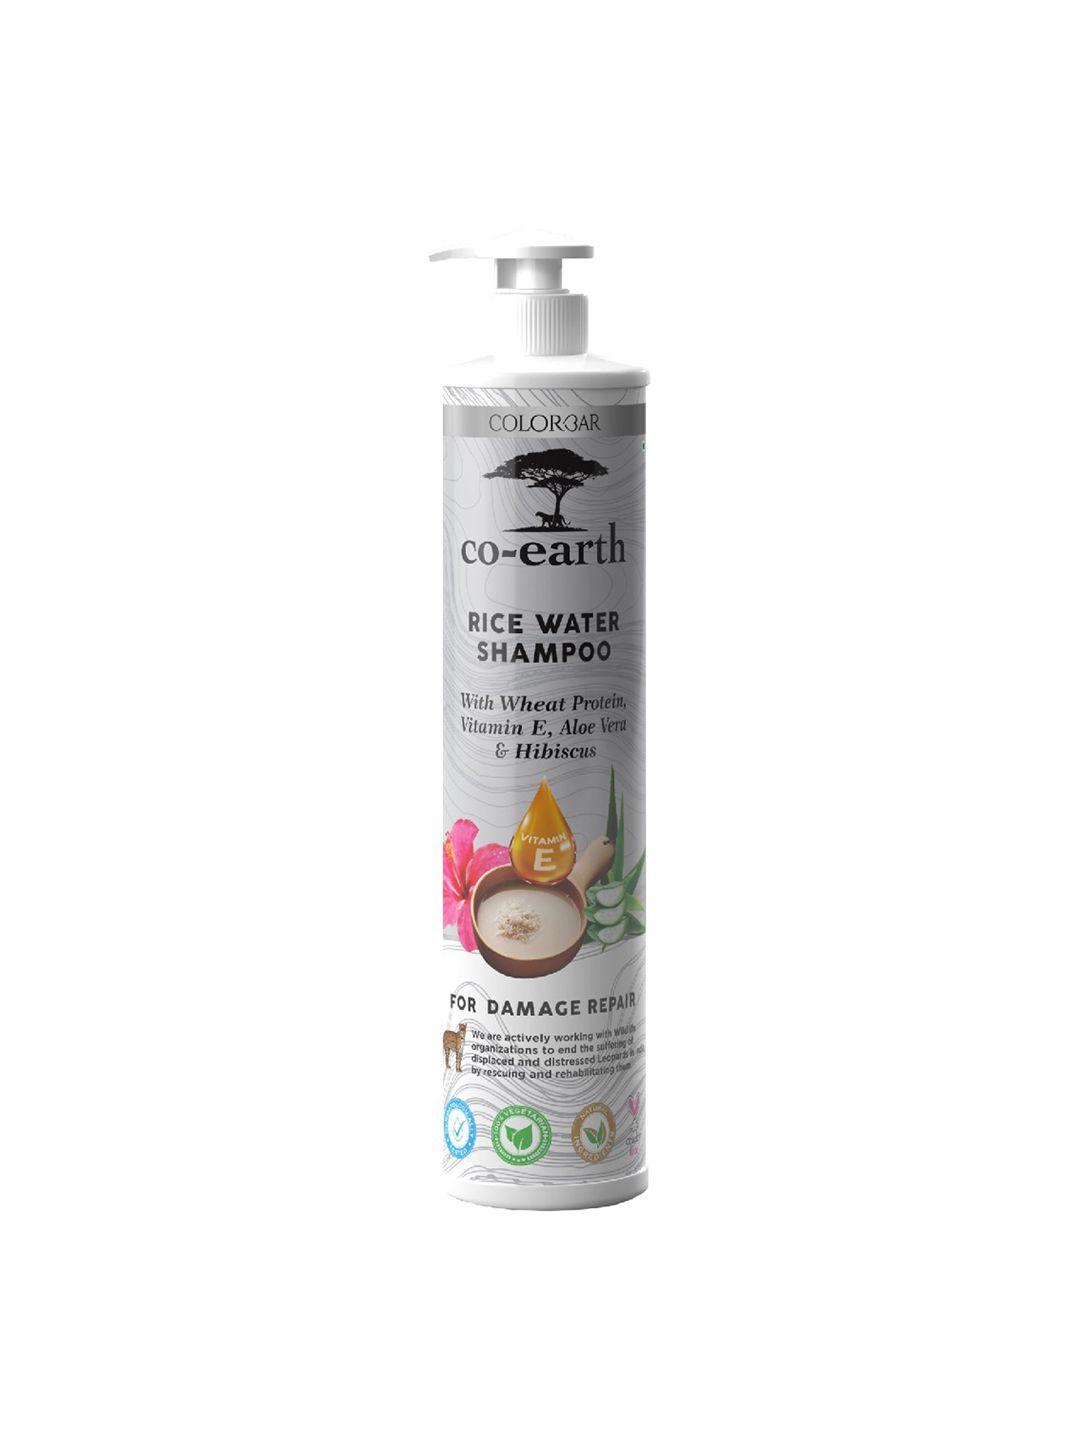 colorbar co-earth rice water shampoo with aloe vera & vitamin e for damage repair - 300ml